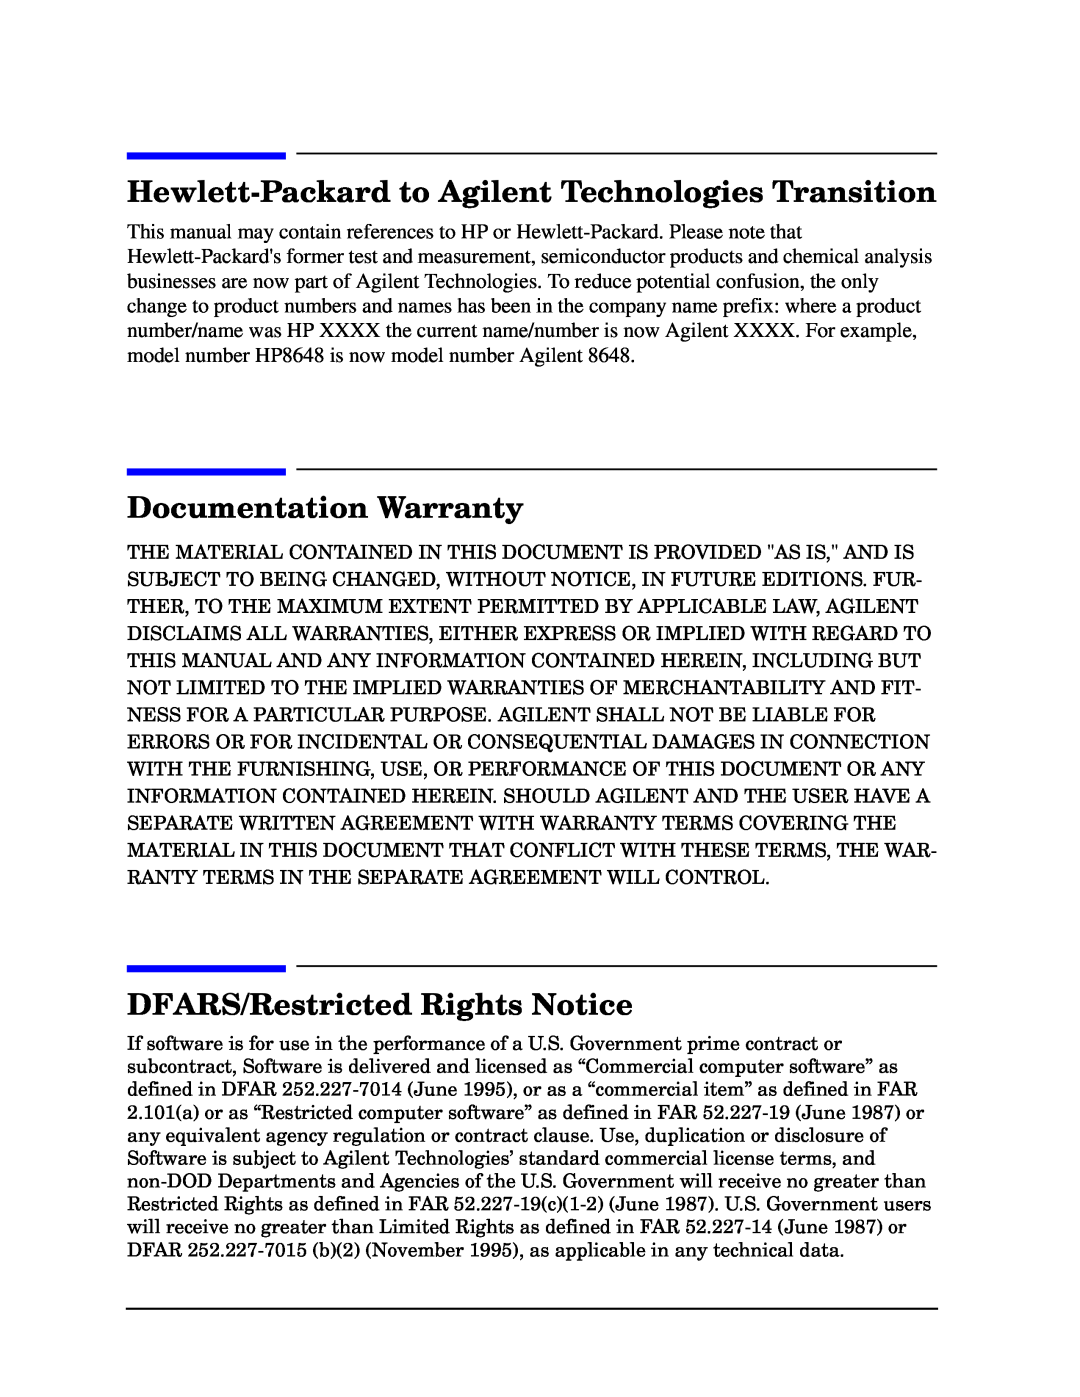 Agilent Technologies 86205A service manual Hewlett-Packard to Agilent Technologies Transition, Documentation Warranty 